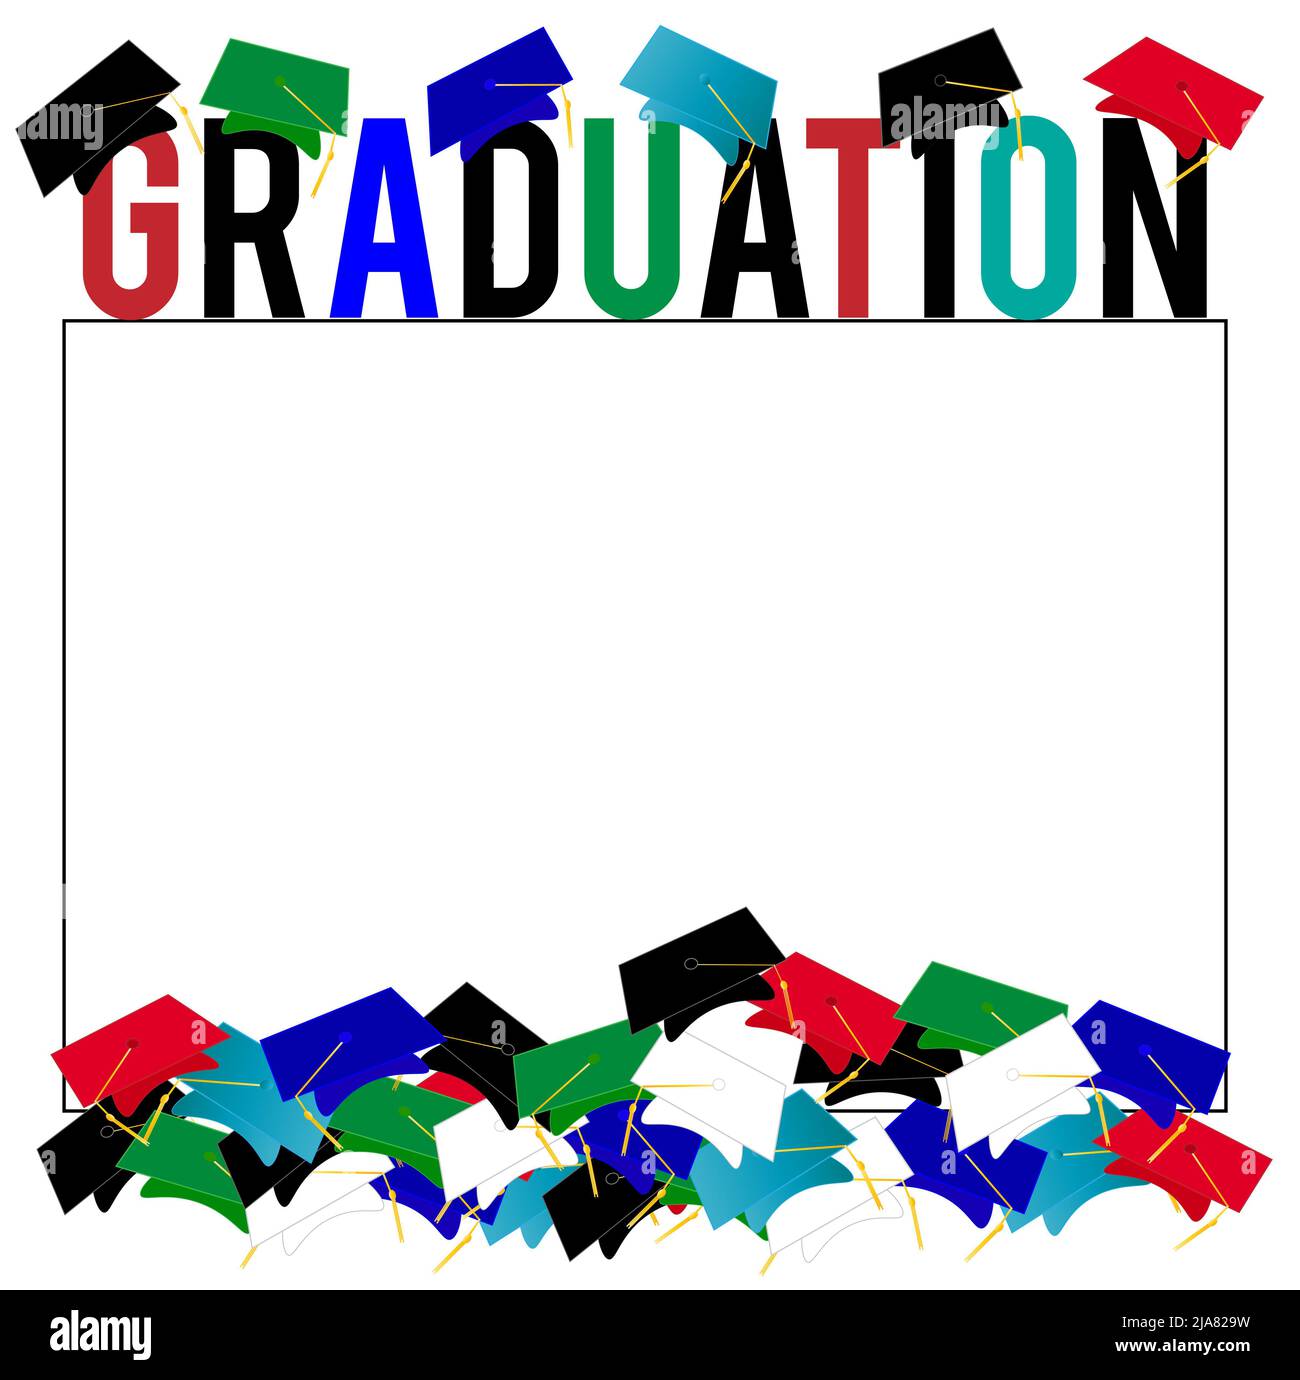 Graduation background with assortment of colorful graduation caps  surrounding, text Graduation Stock Photo - Alamy